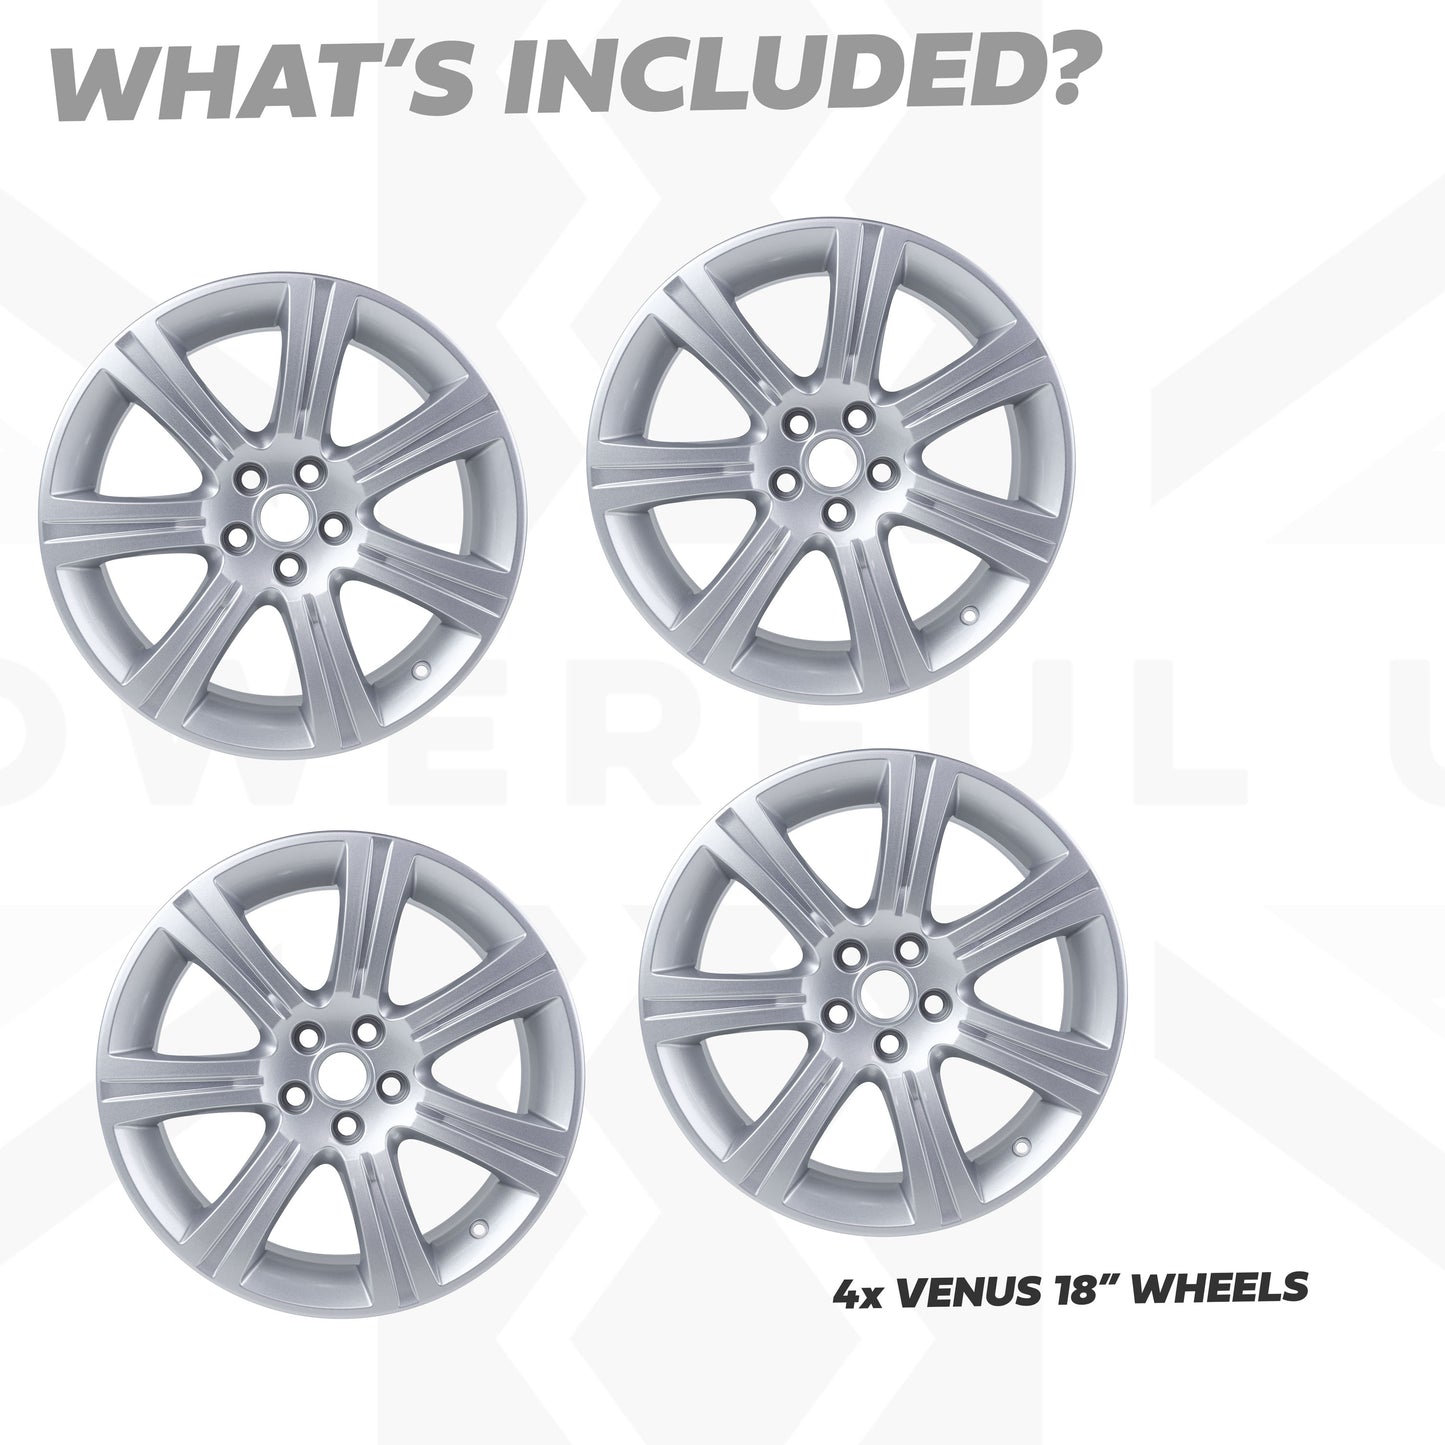 4x Genuine 18" Venus Alloy Wheels for Range Rover Evoque